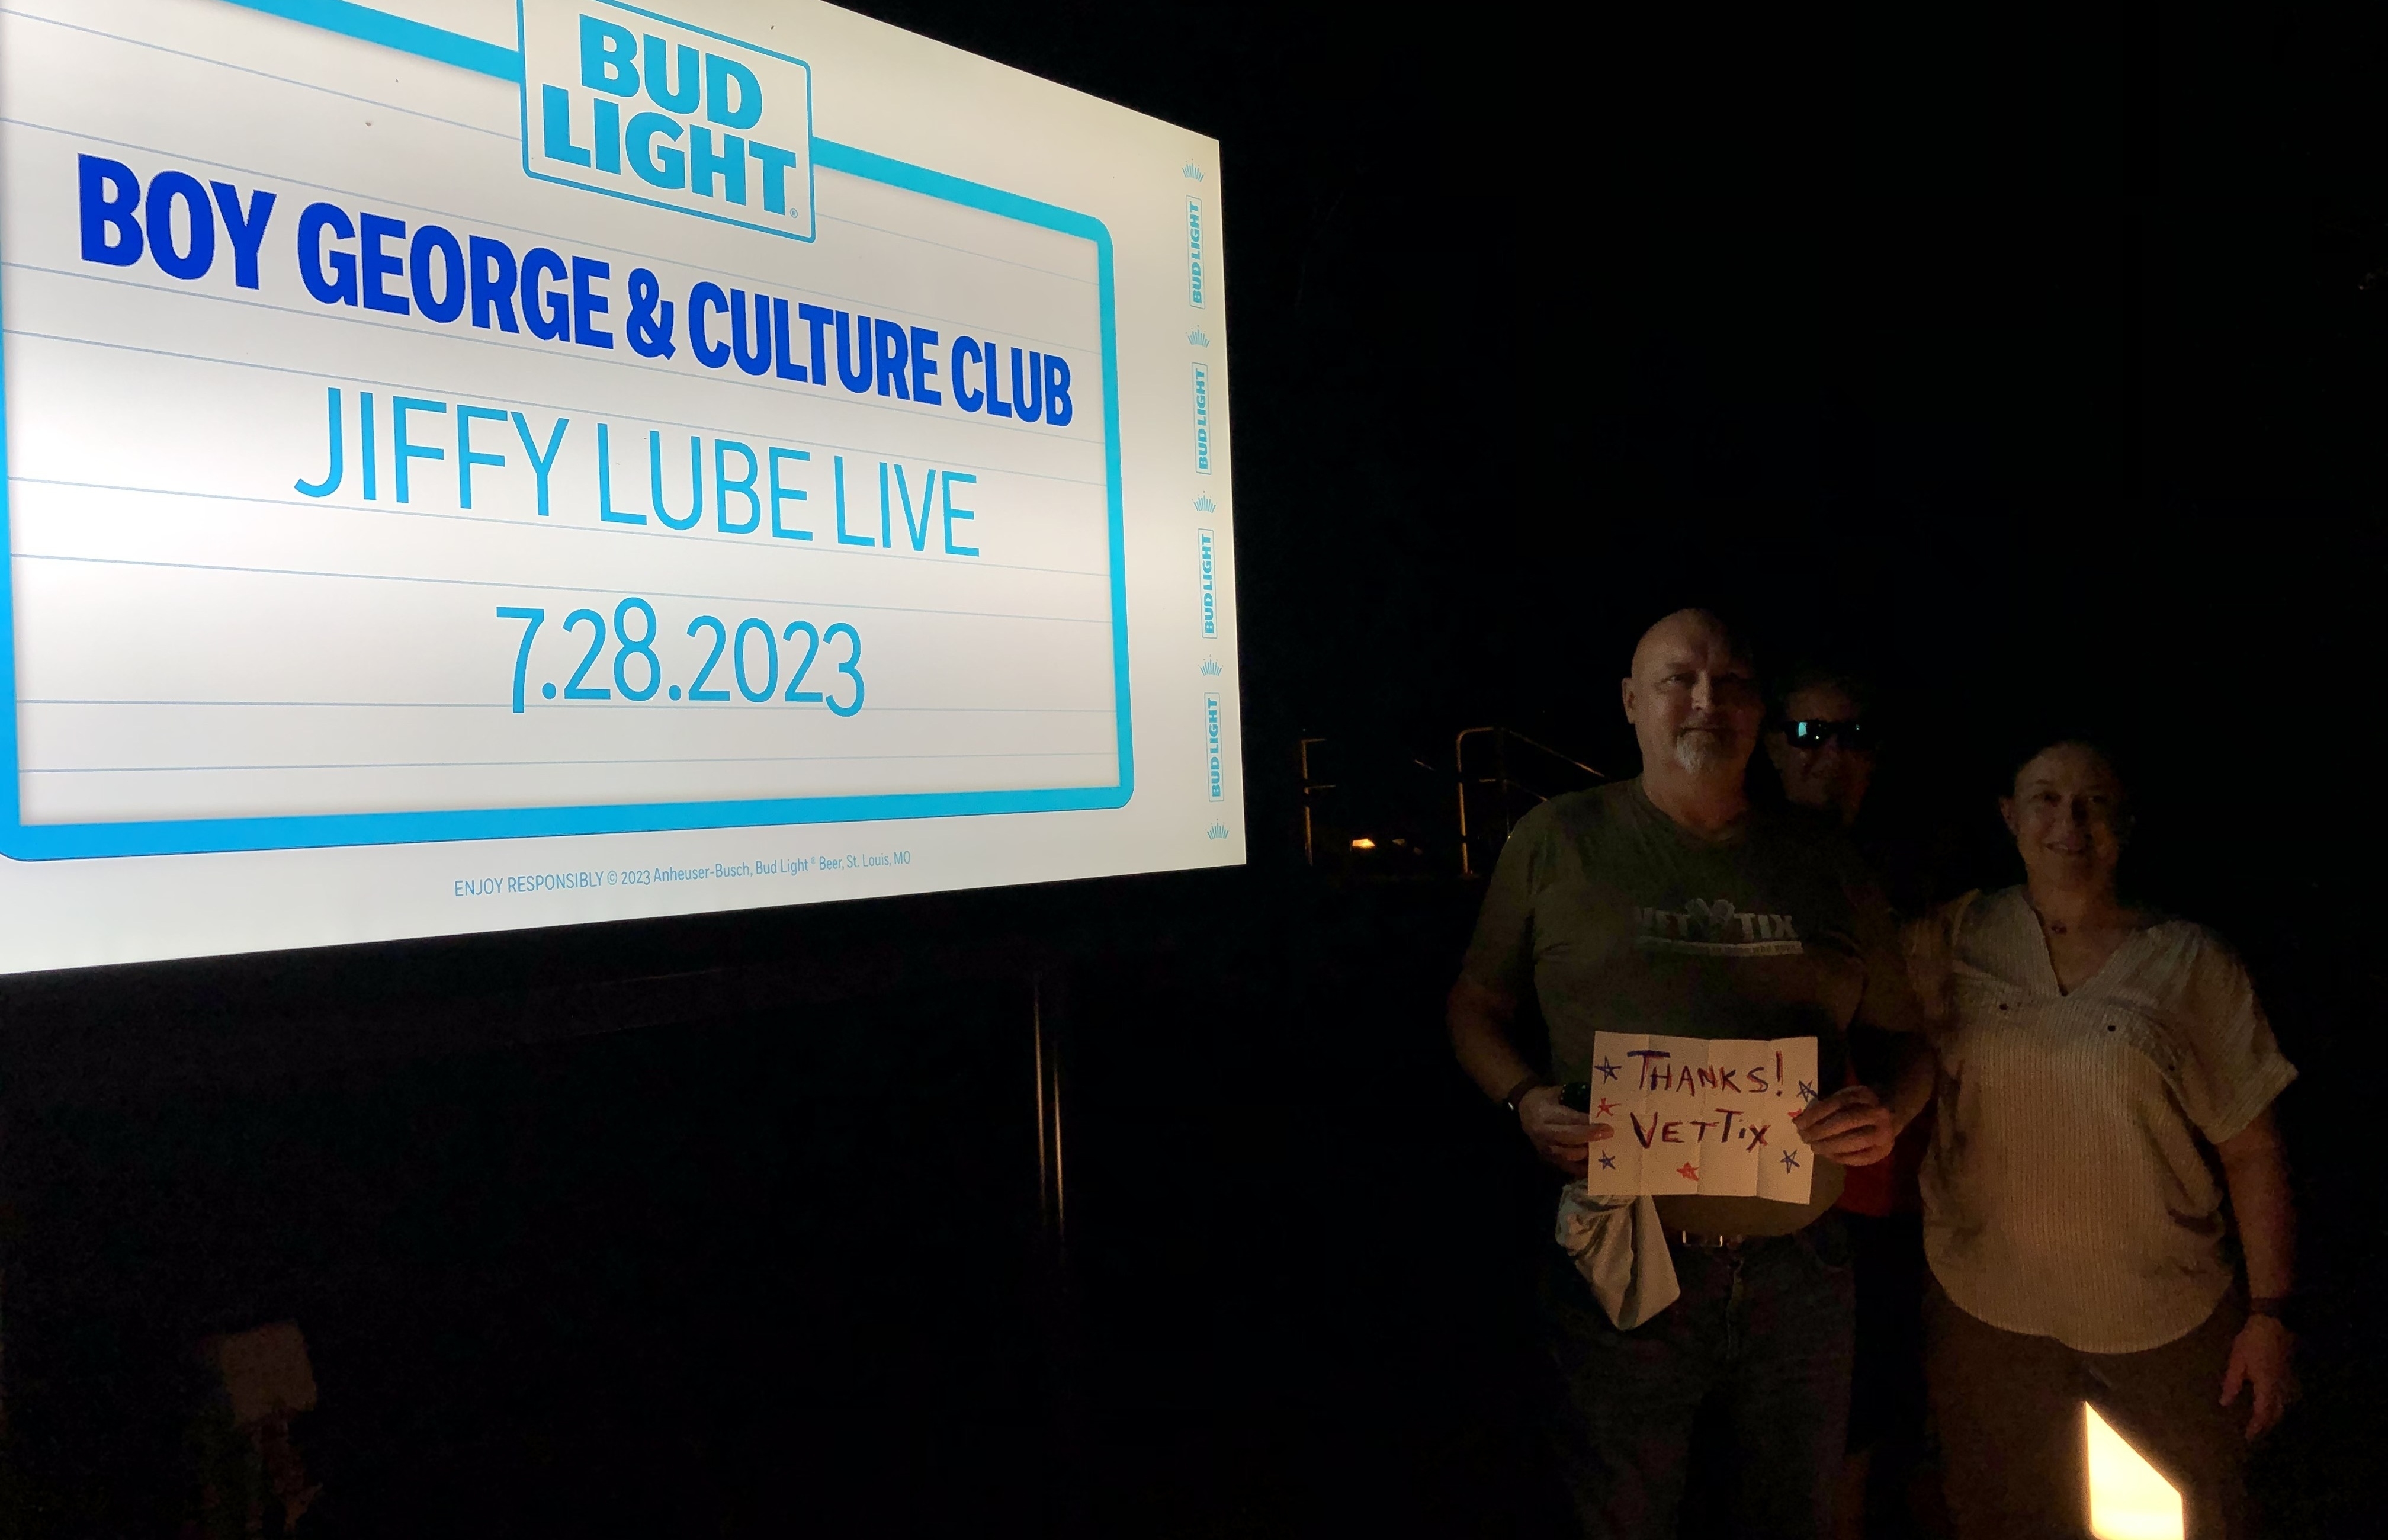 Boy George & Culture Club: the Letting It Go Show